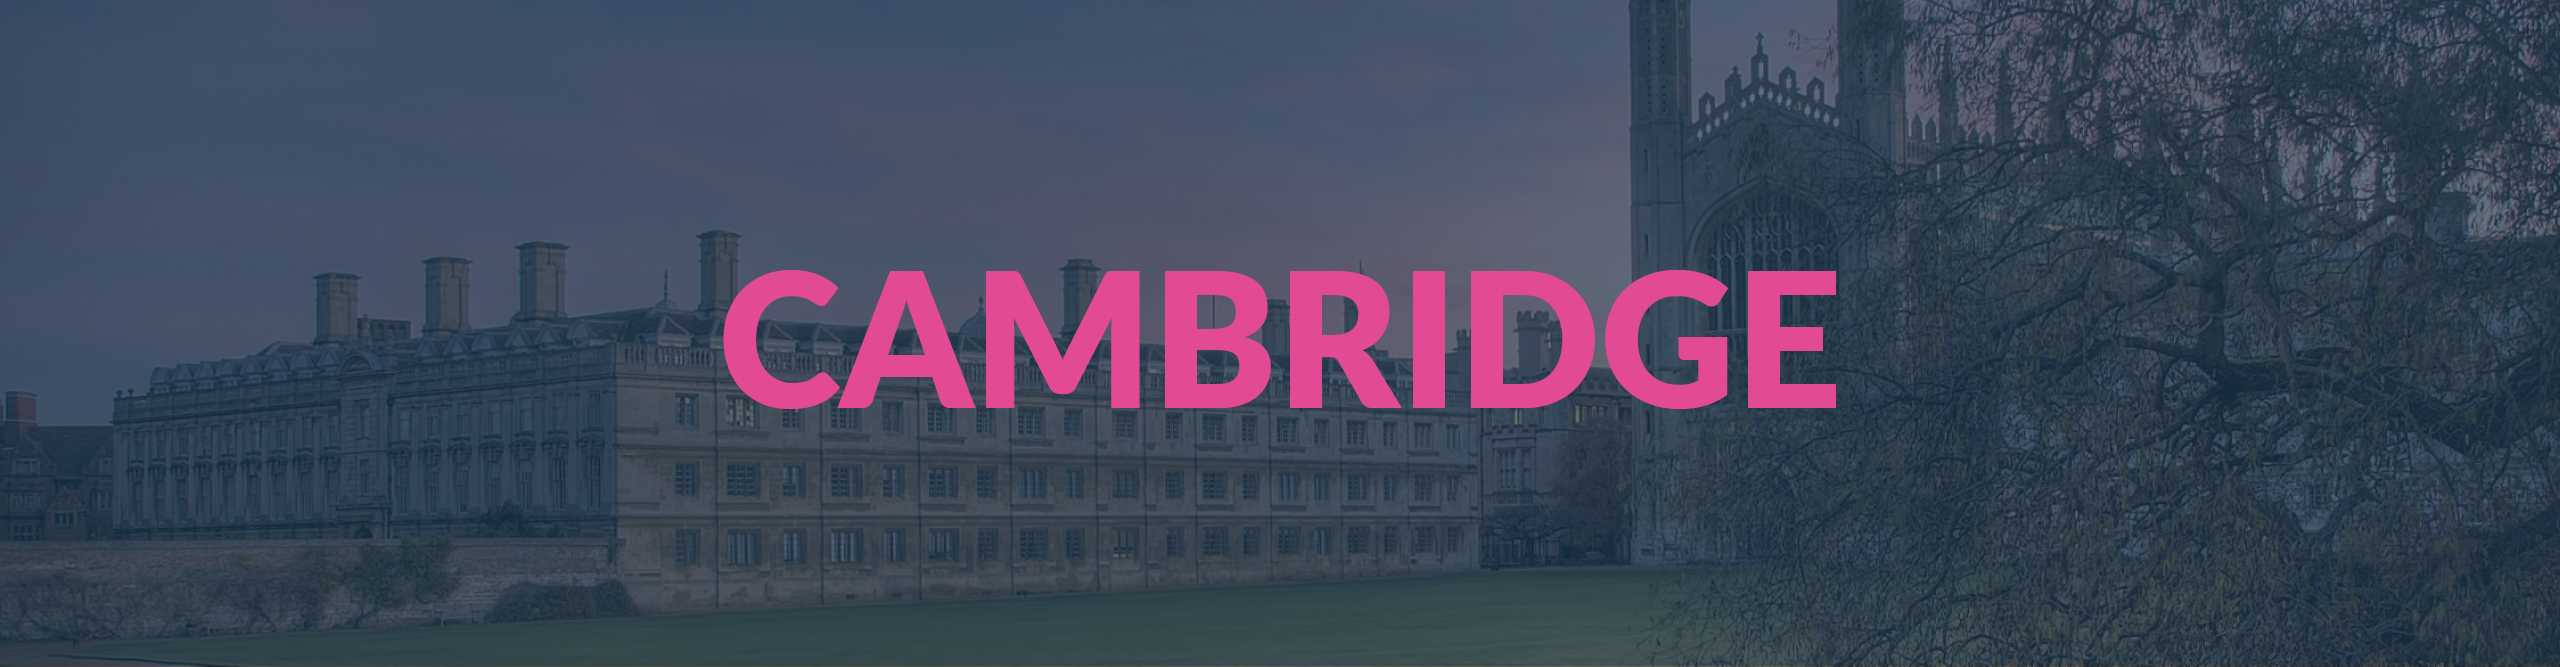 Design, Branding and Marketing Services in Cambridge